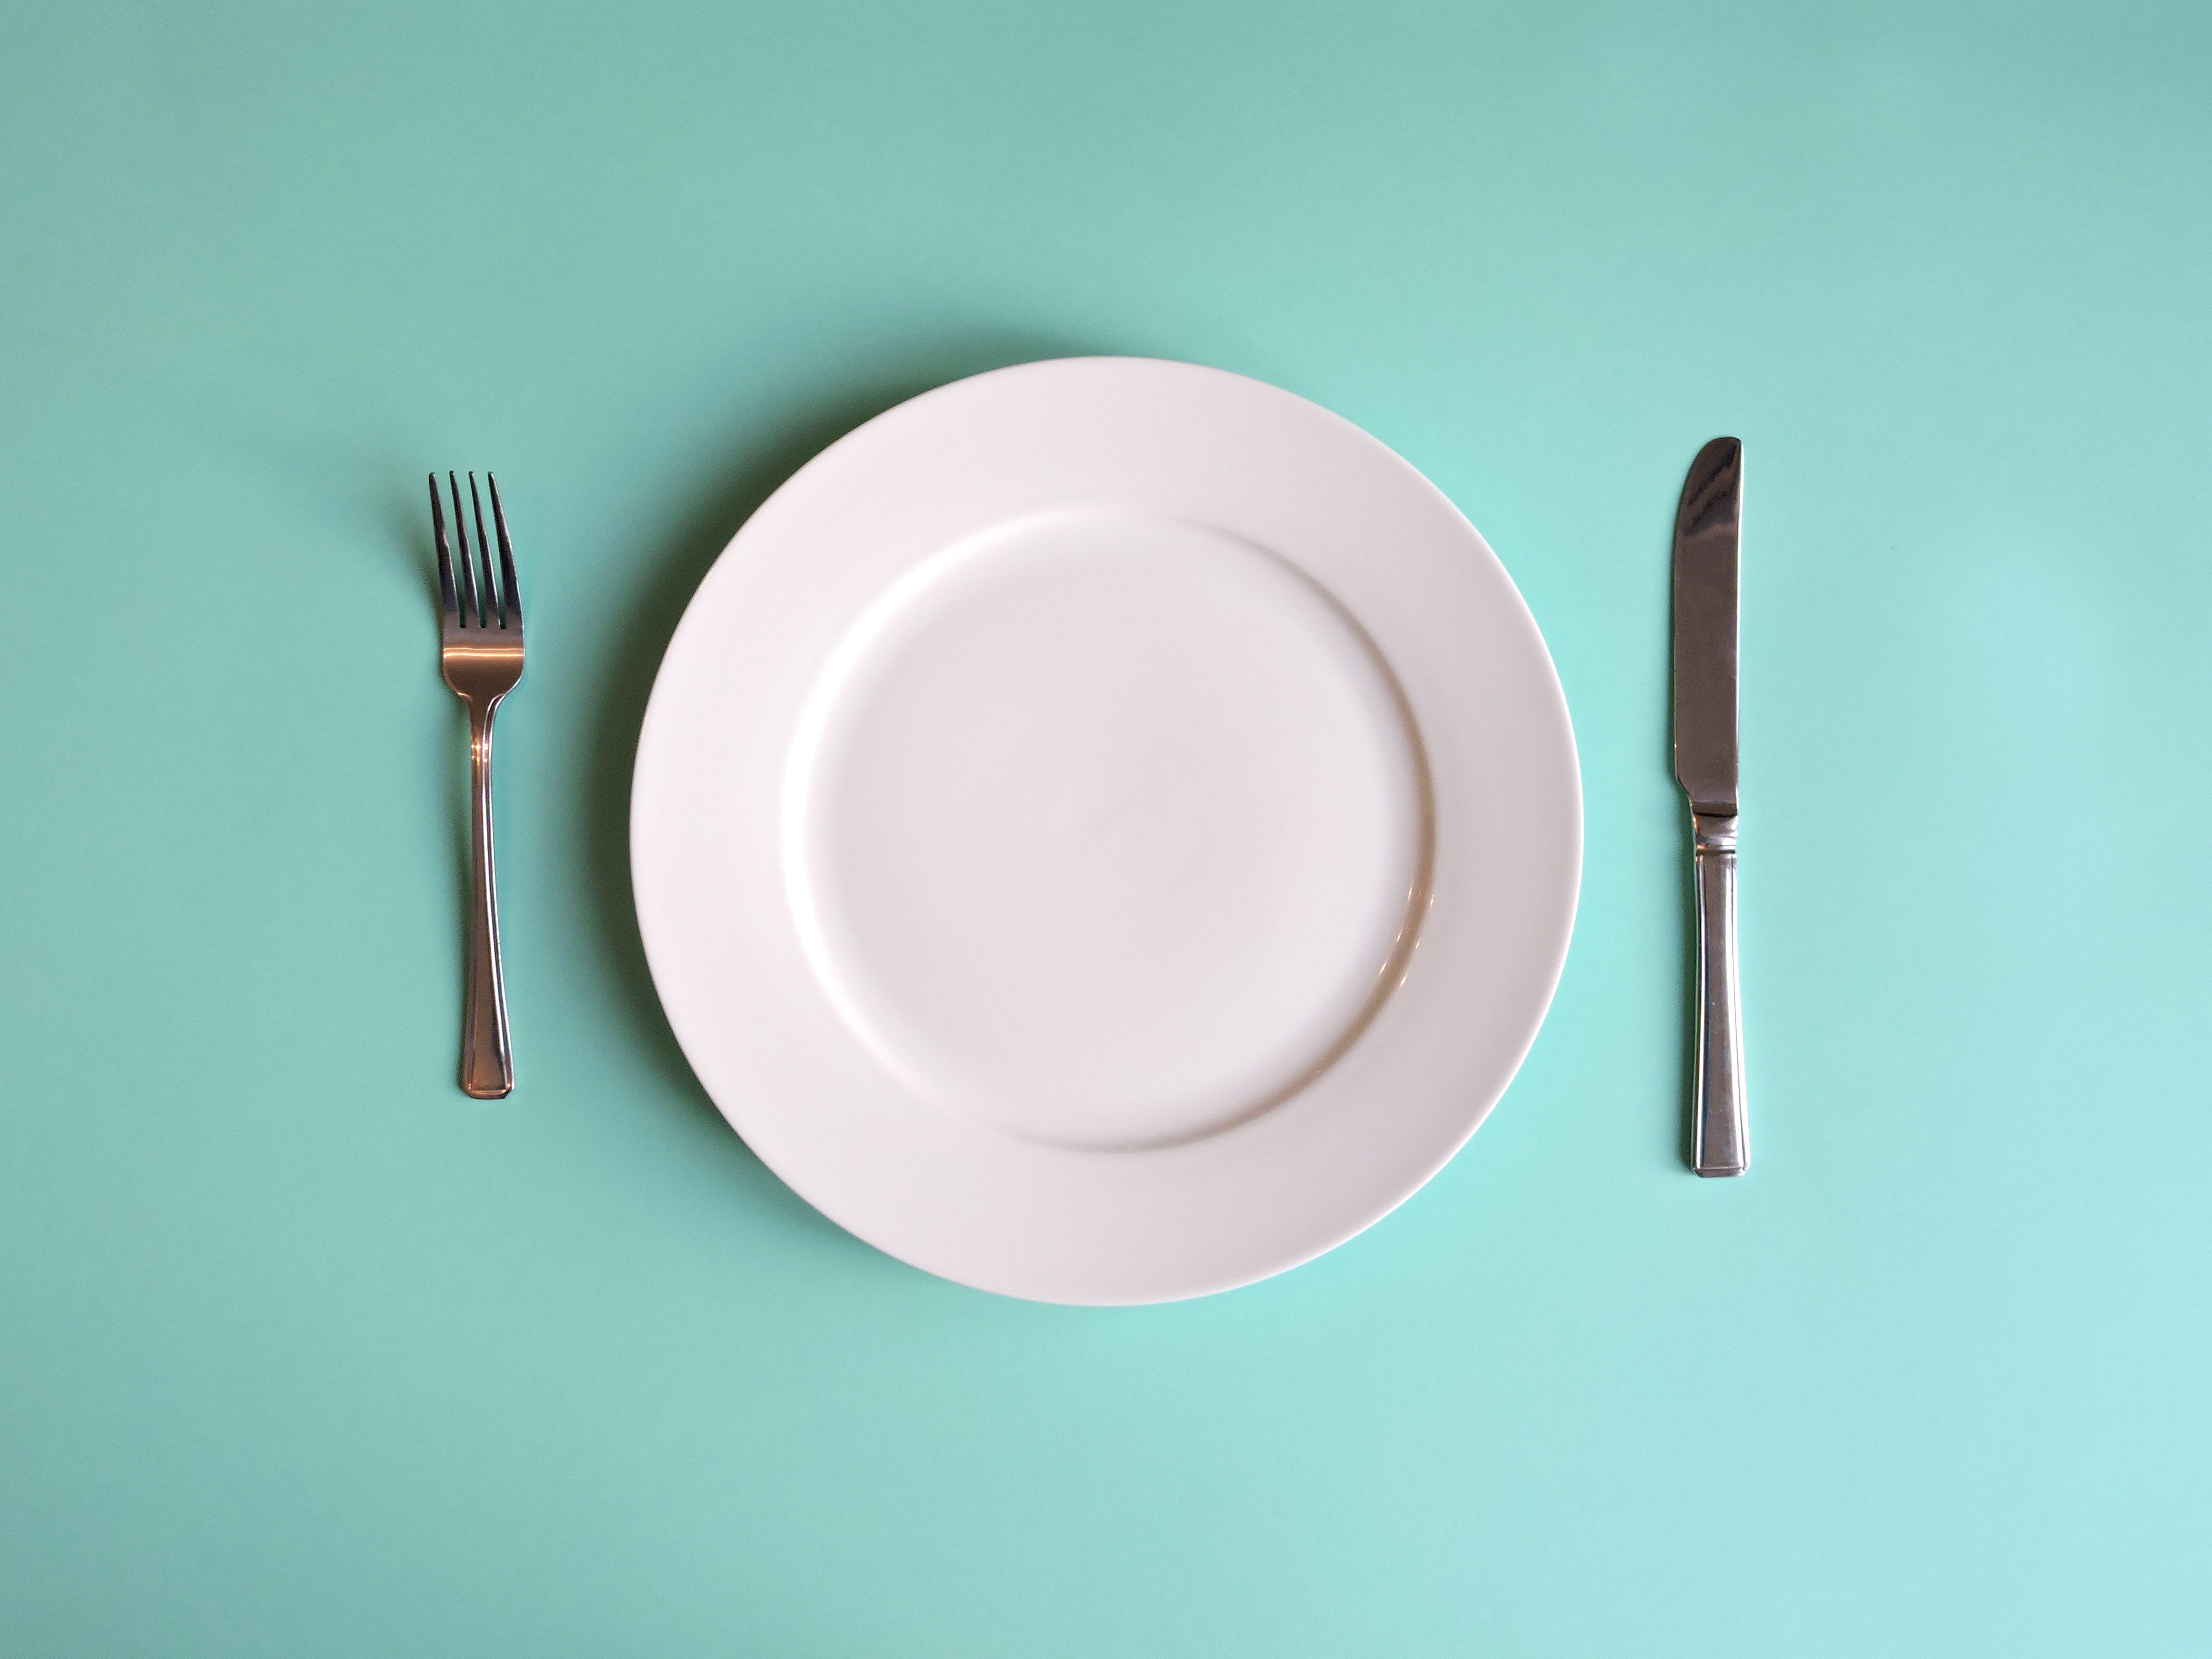 Лишняя тарелка на столе. Пустая тарелка. Пустая тарелка на столе. Пустая тарелка с приборами. Тарелка на столе.